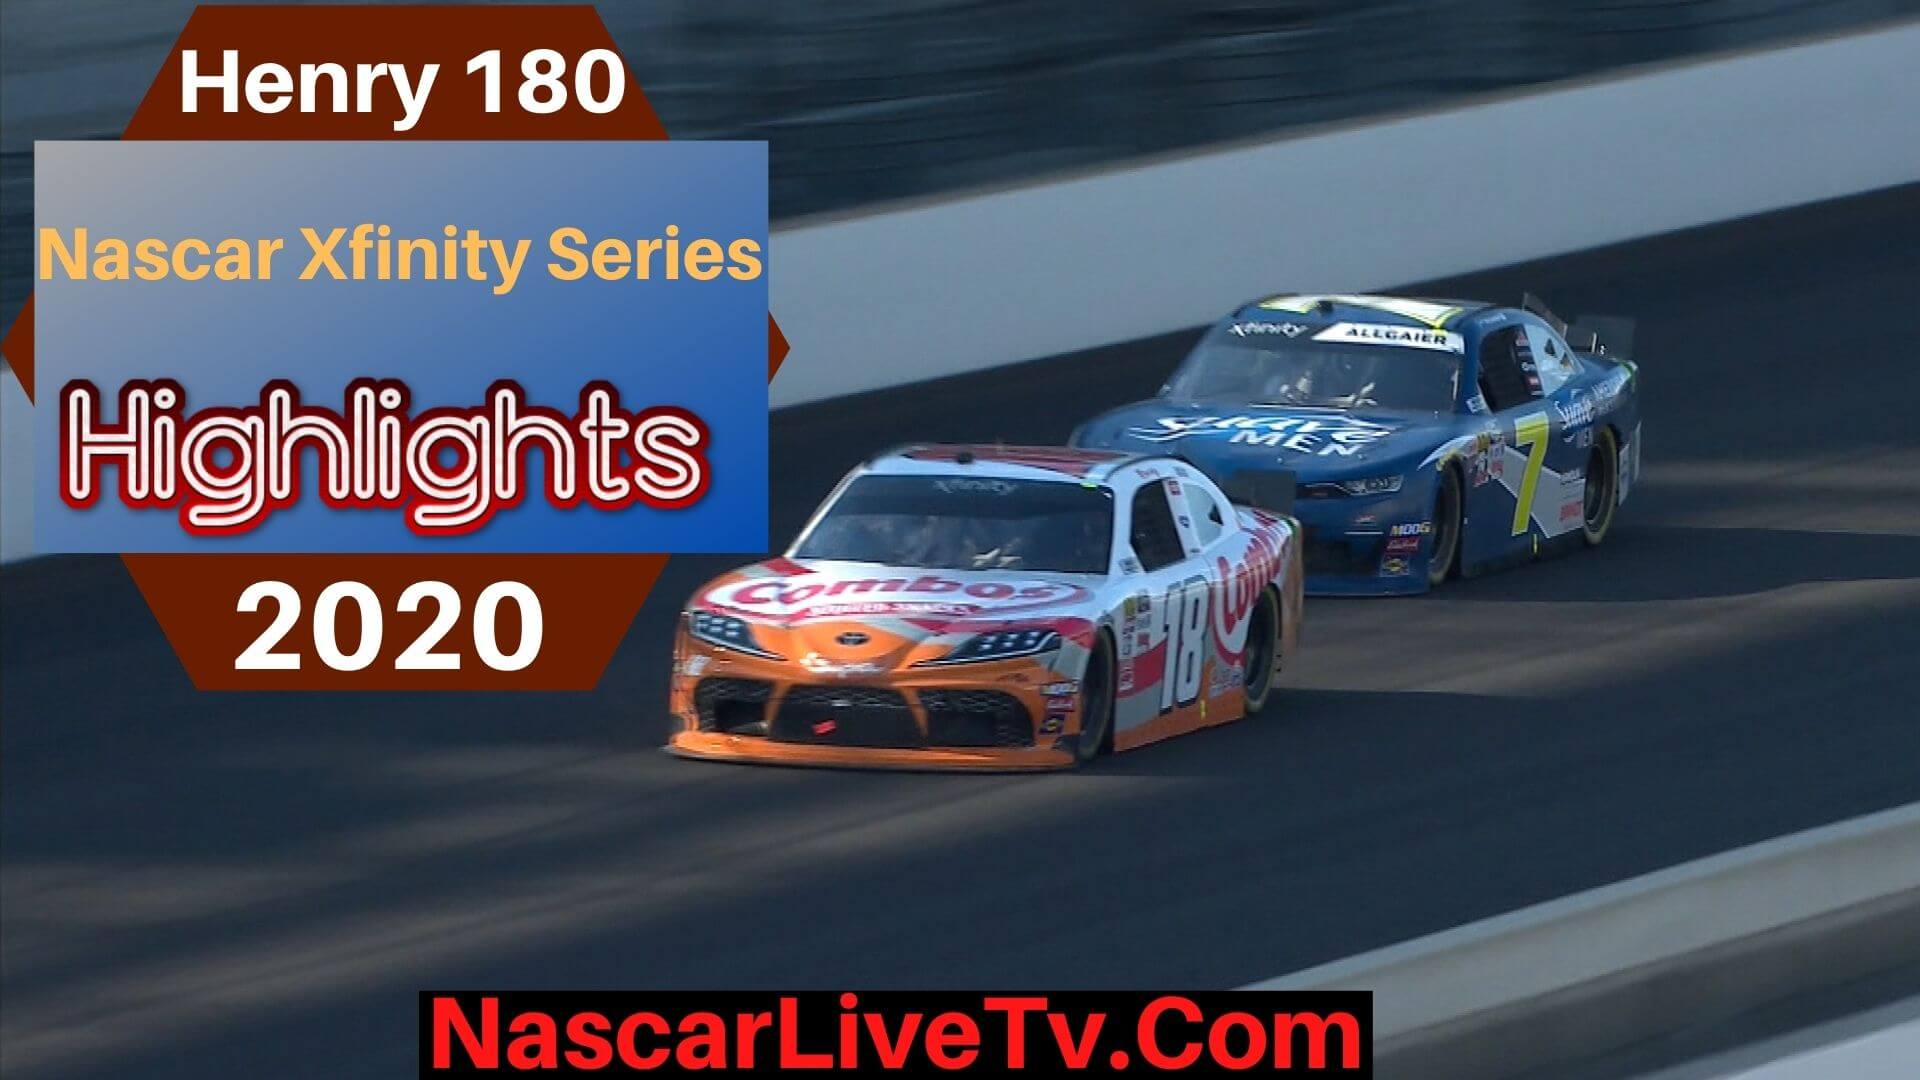 Henry 180 Nascar Xfinity Series 2020 Highlights